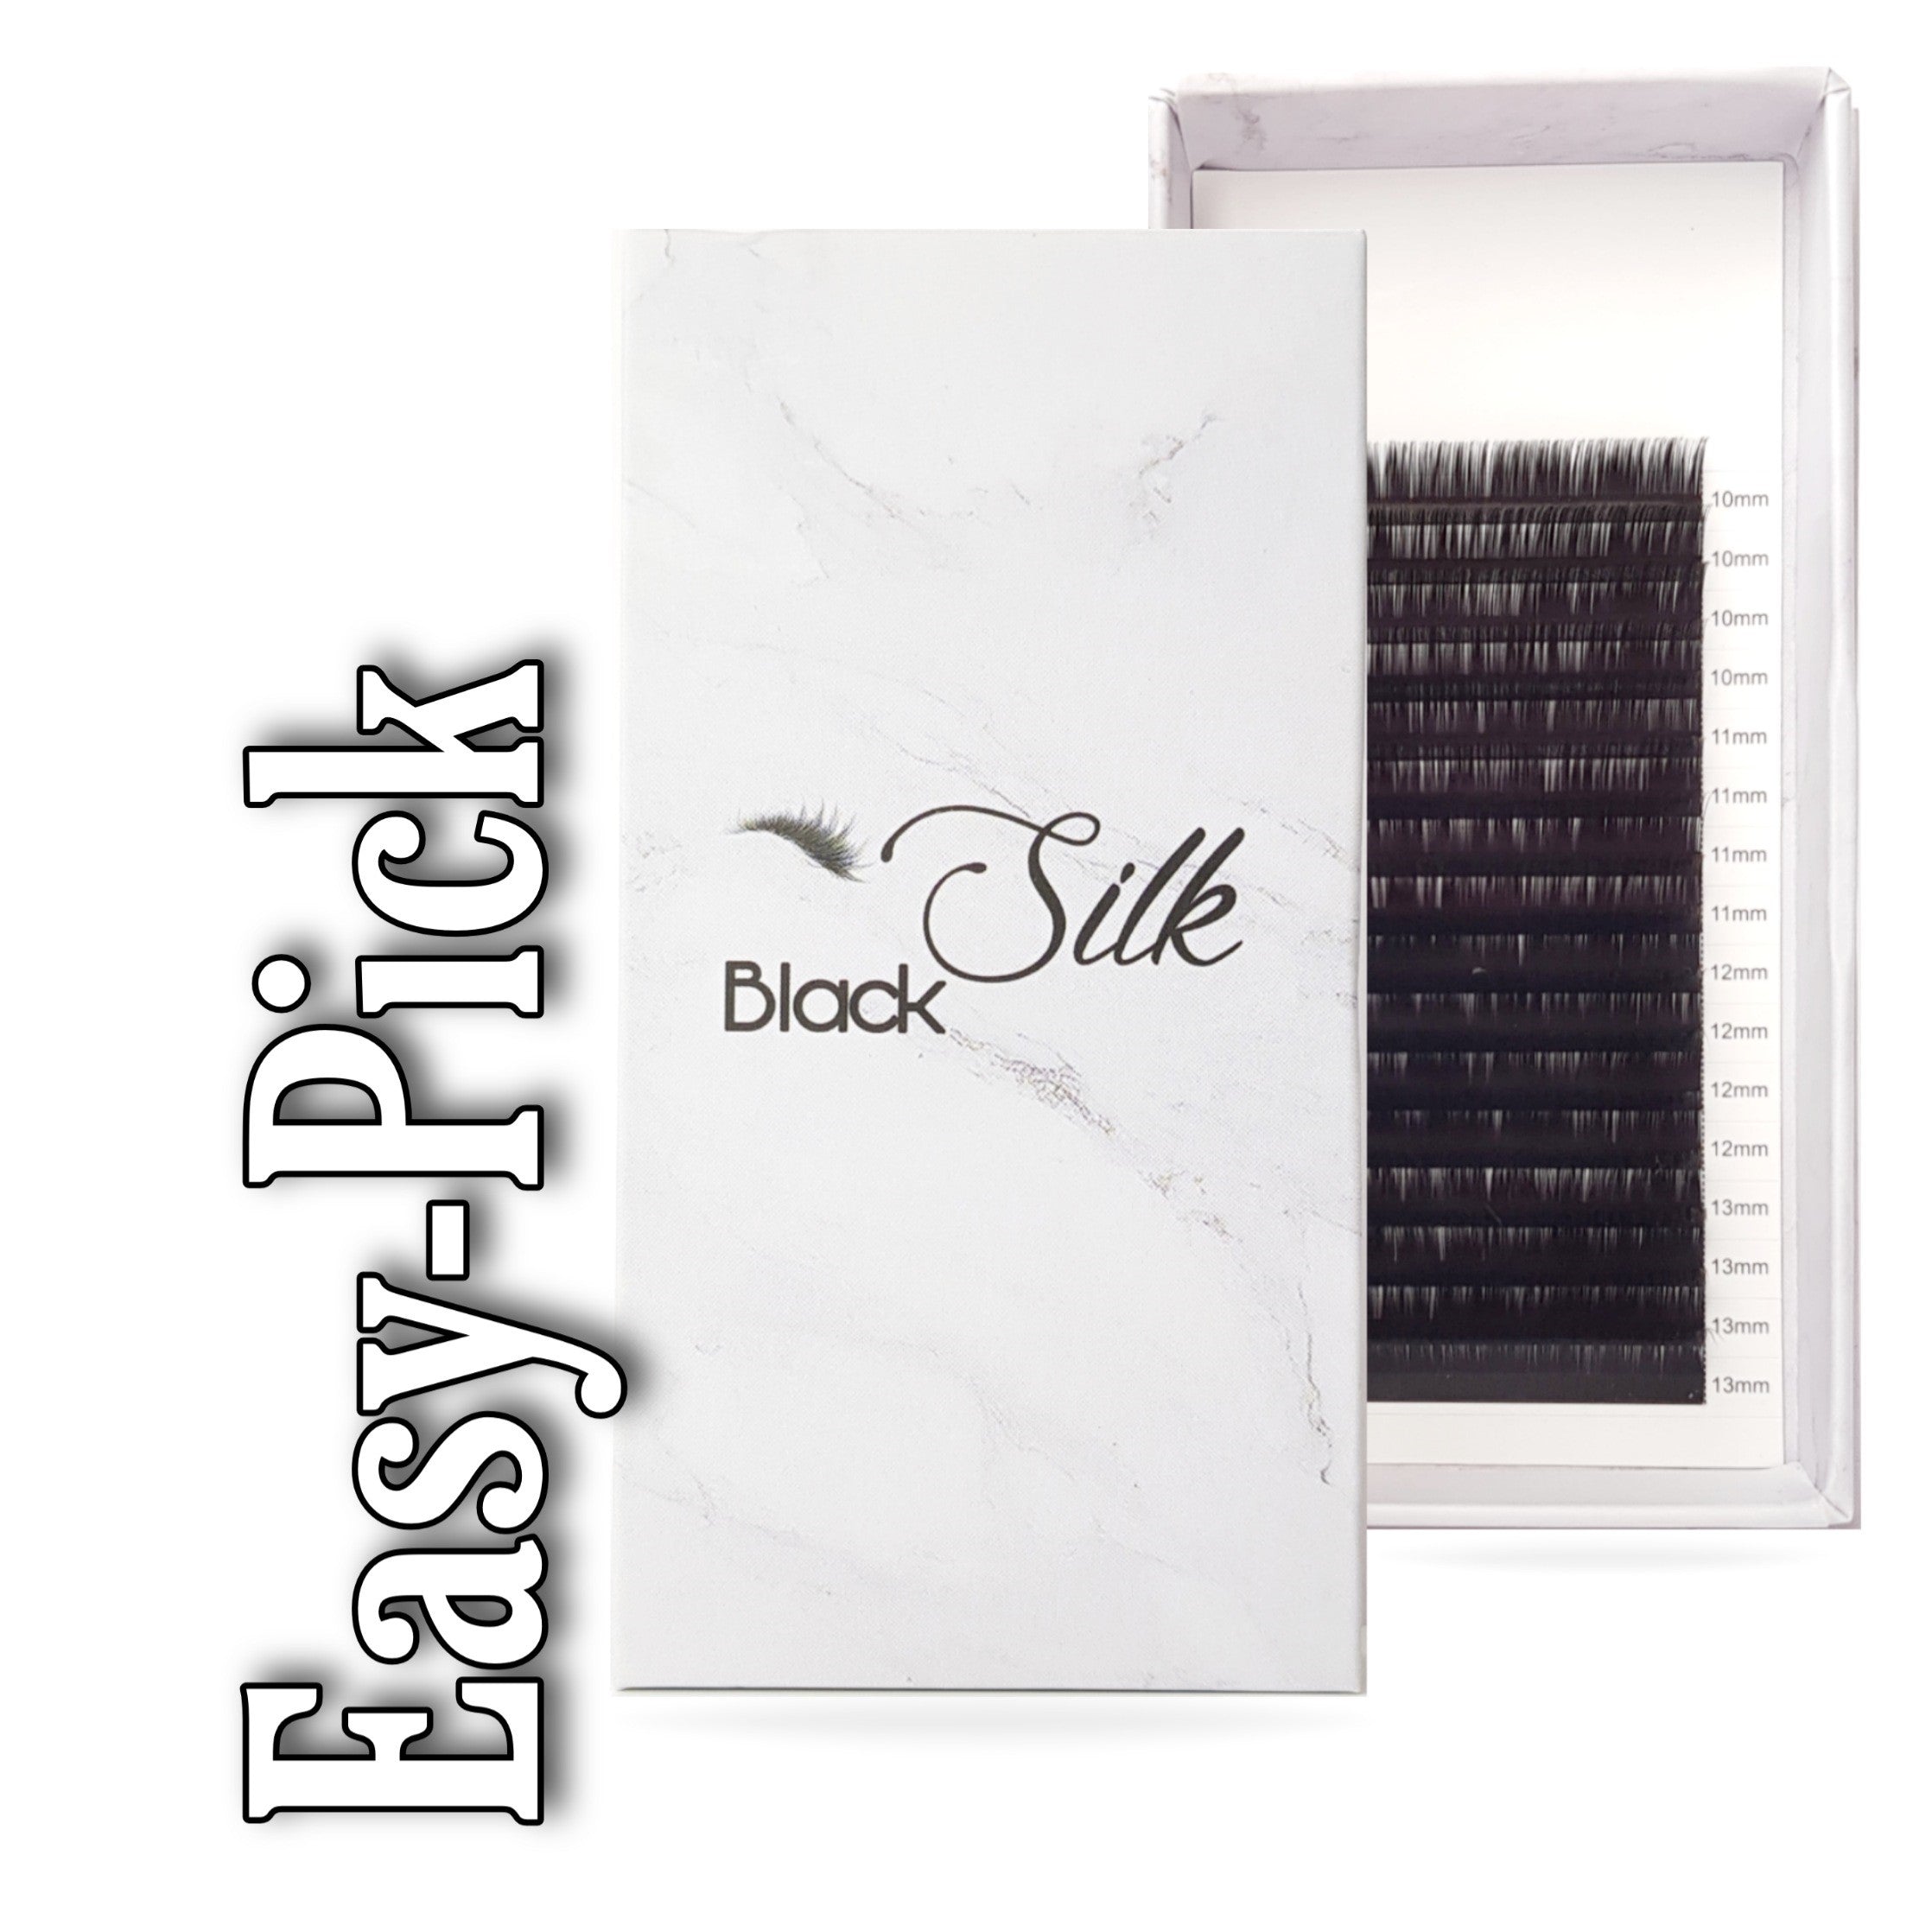 Original Volume - BLACK Silk 0.07 - Easy Pick